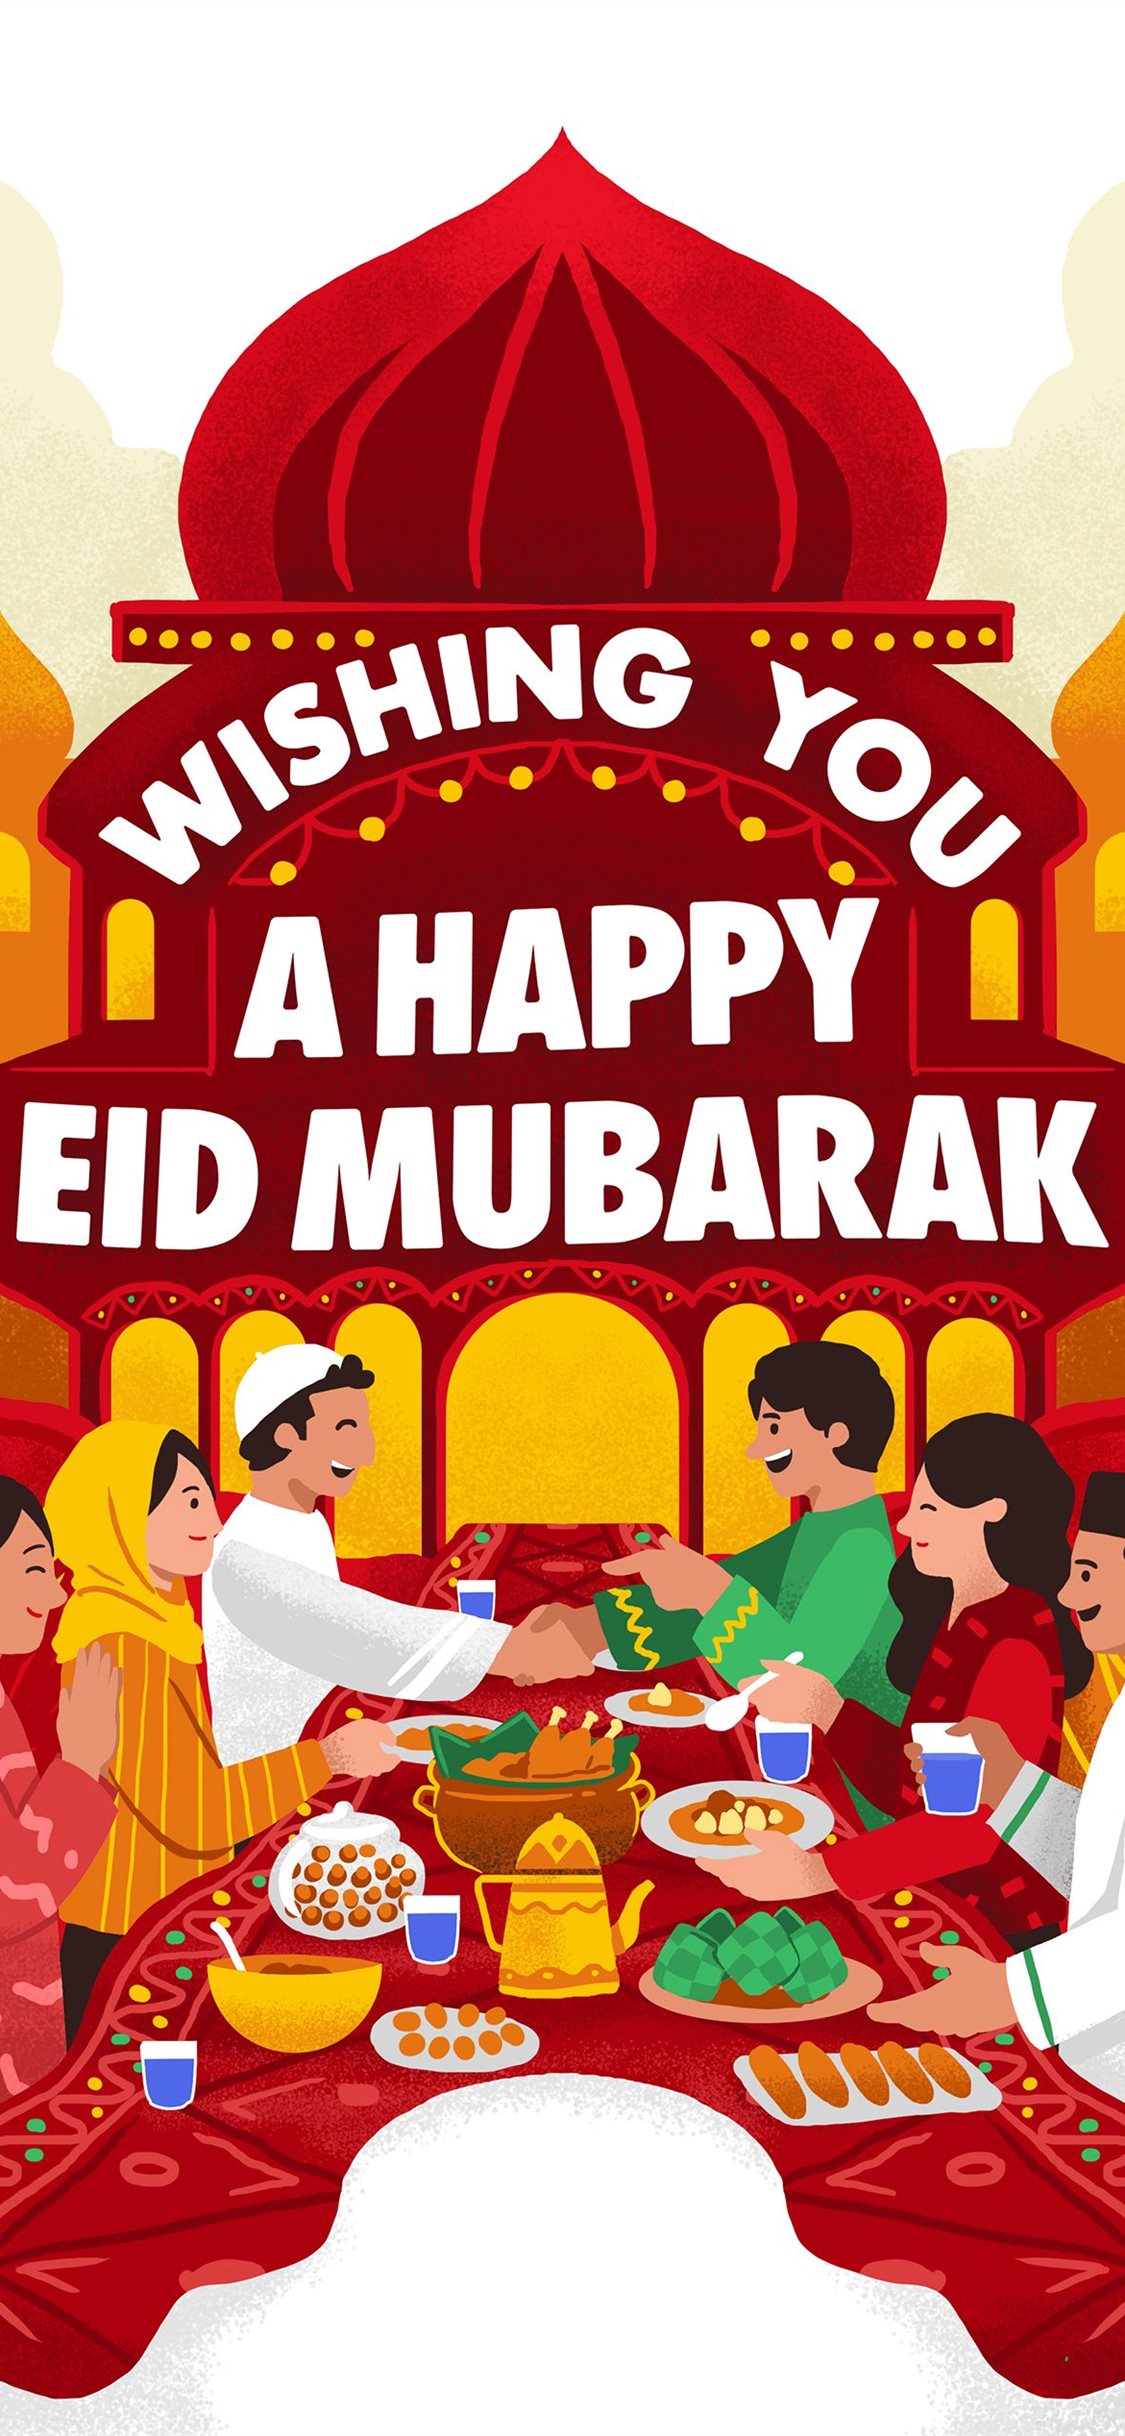 Free Eid alFitr Wallpaper Background  Download in PDF Illustrator PSD  EPS SVG JPG PNG  Templatenet